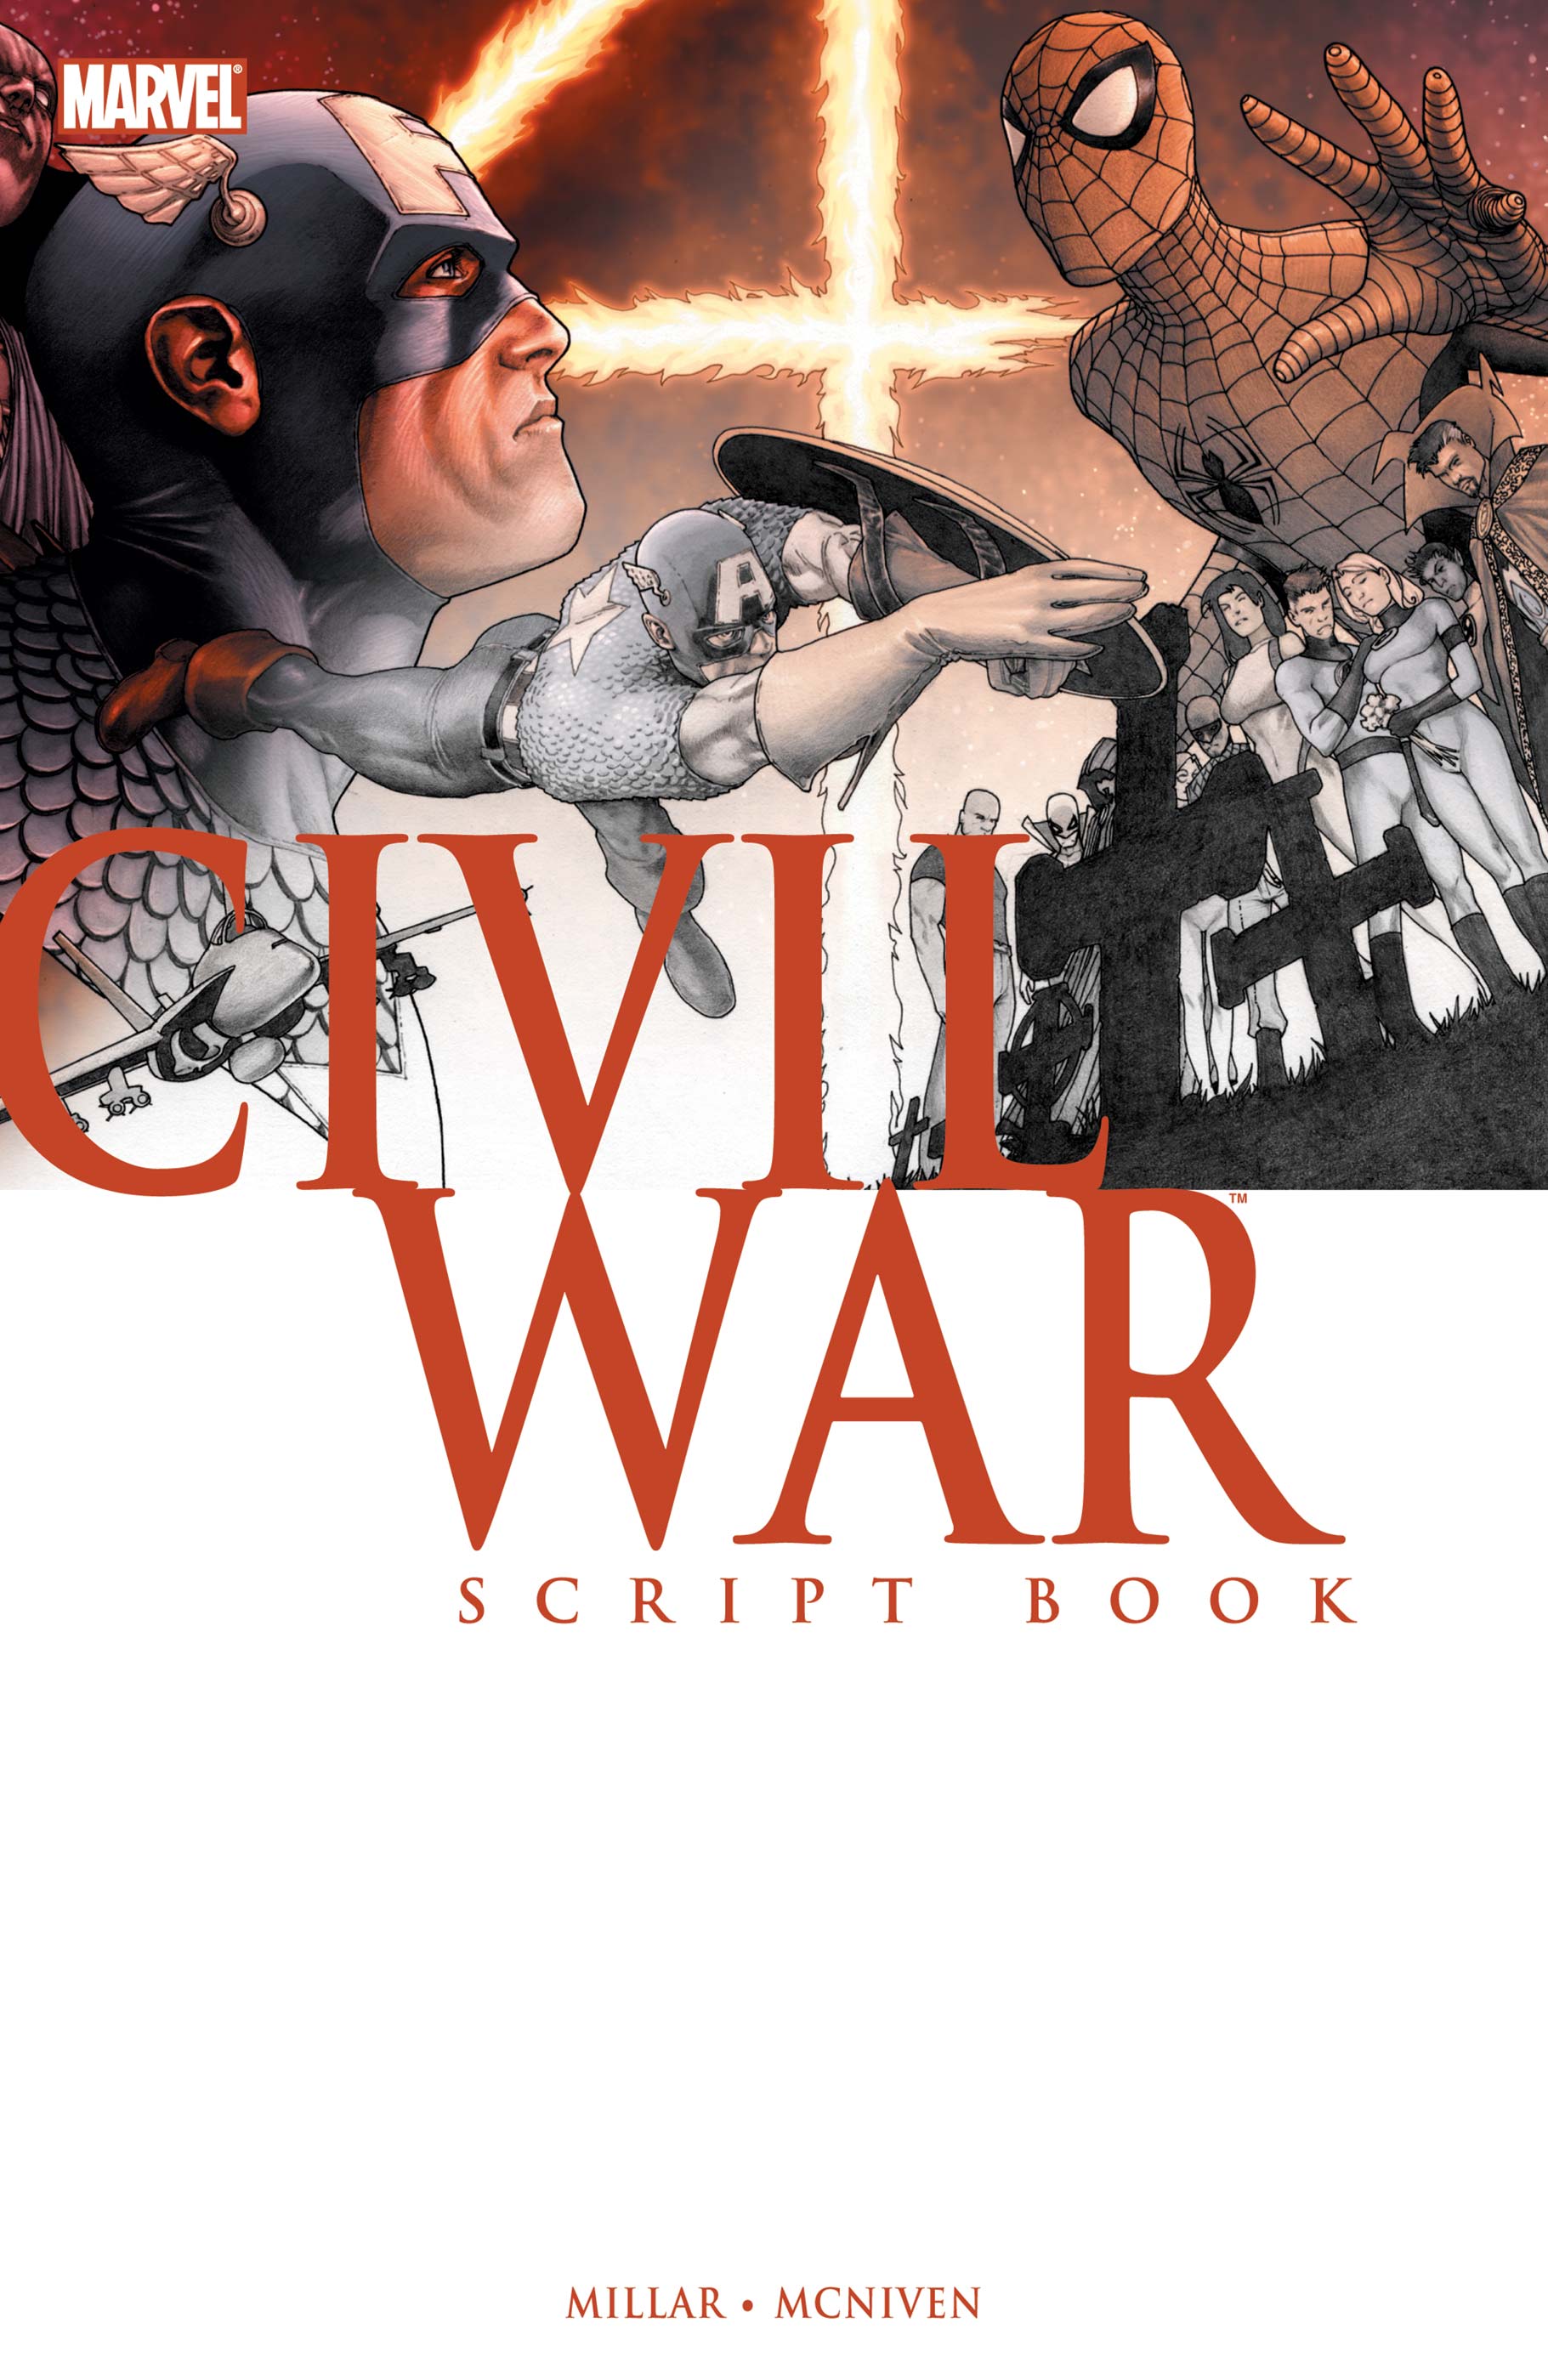 Civil War Script Book (Trade Paperback)